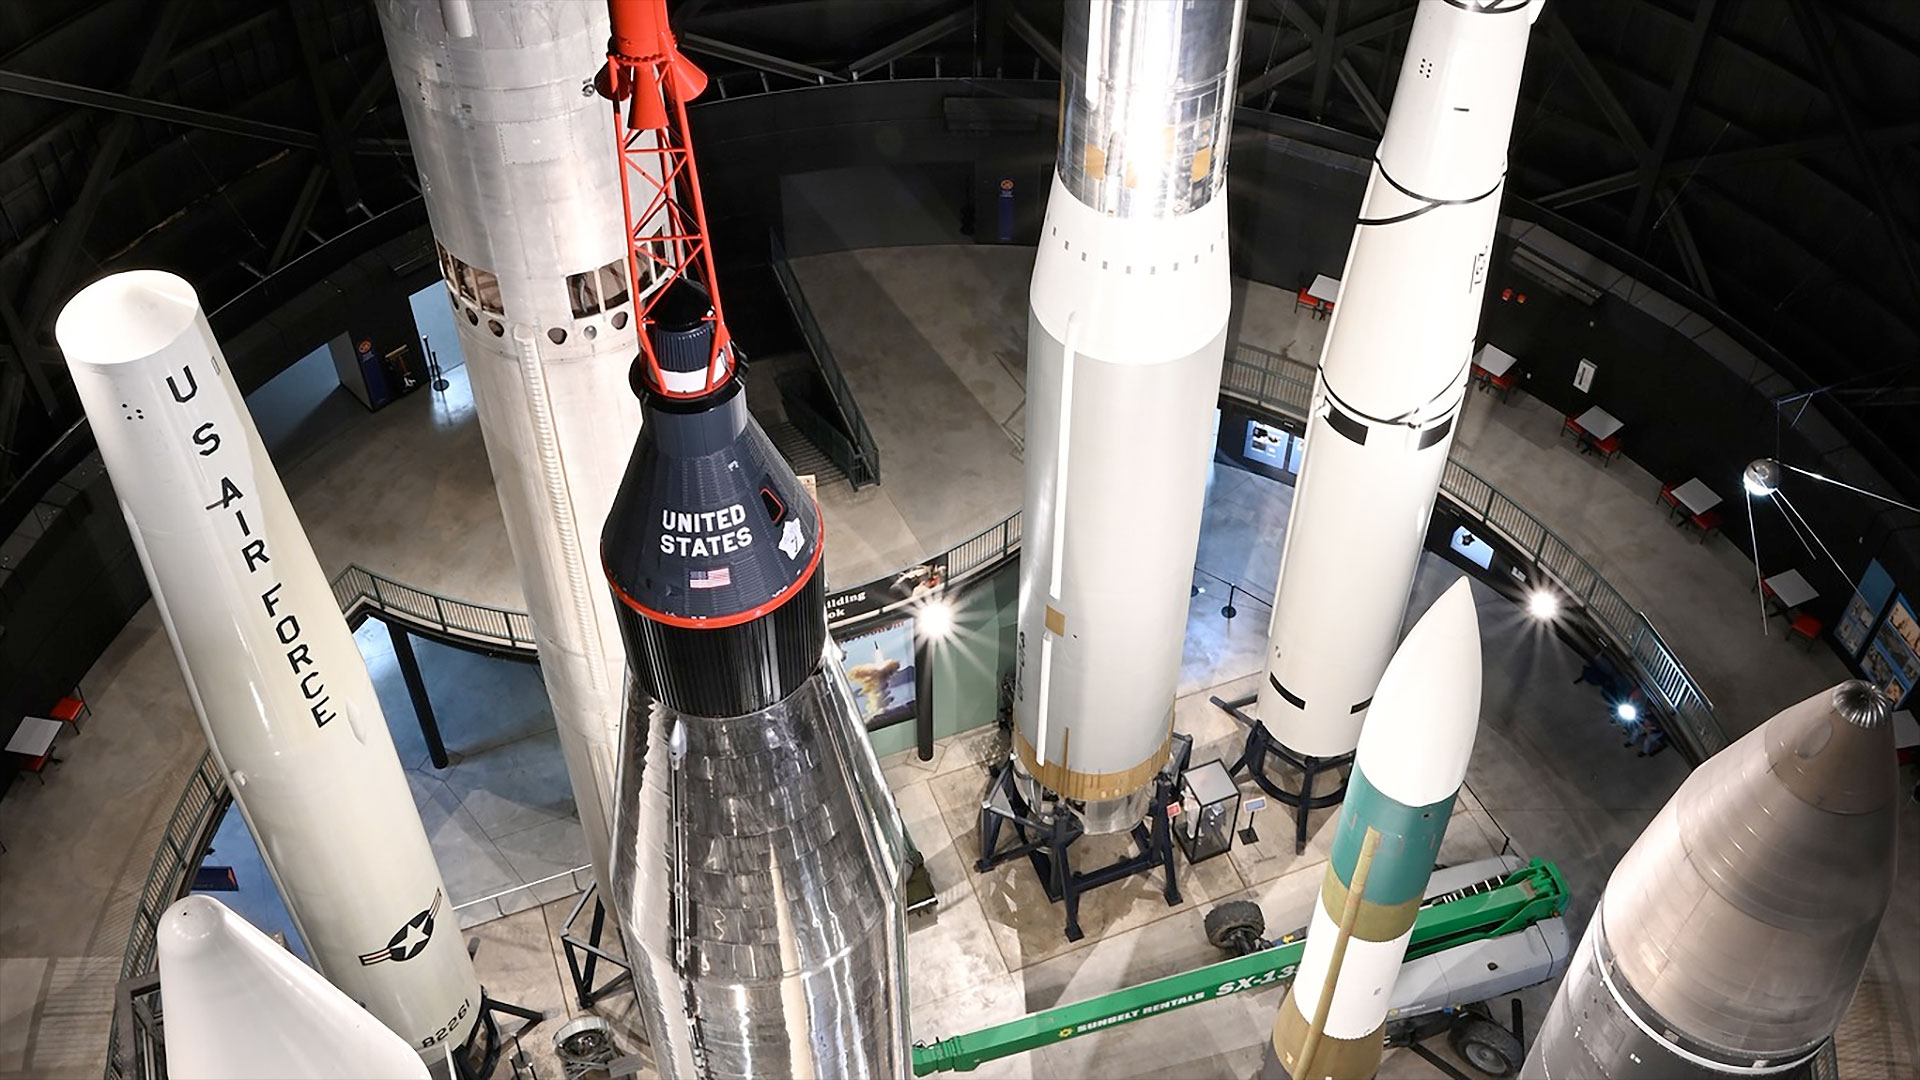 Restored Atlas rocket erected on display as Mercury astronaut’s ride to orbit Space